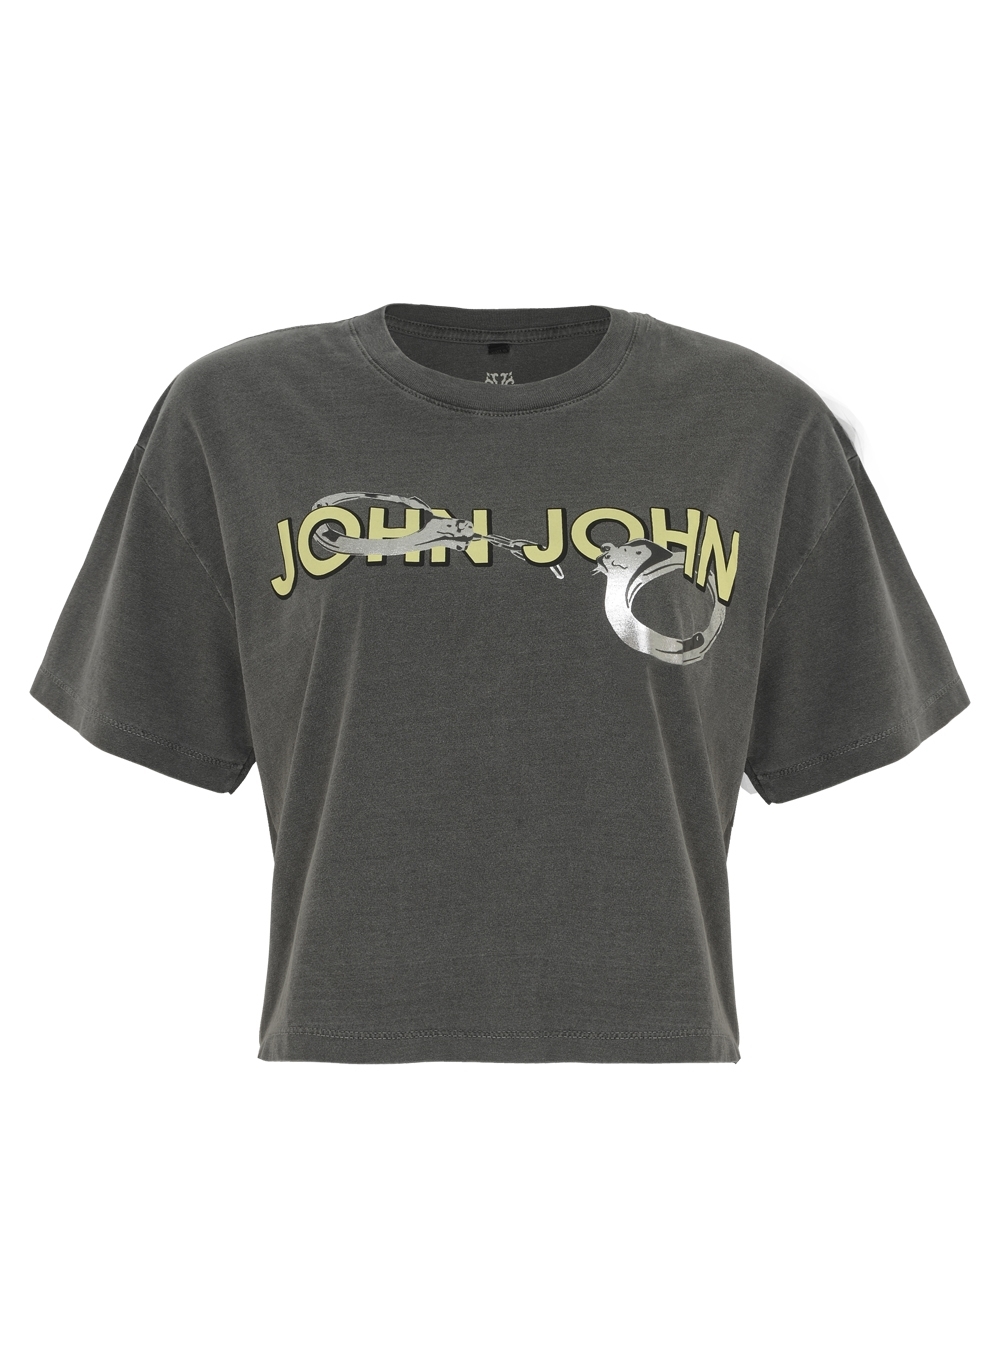 Camiseta John John Hancuff Feminina 03.62.0214 - Camiseta John